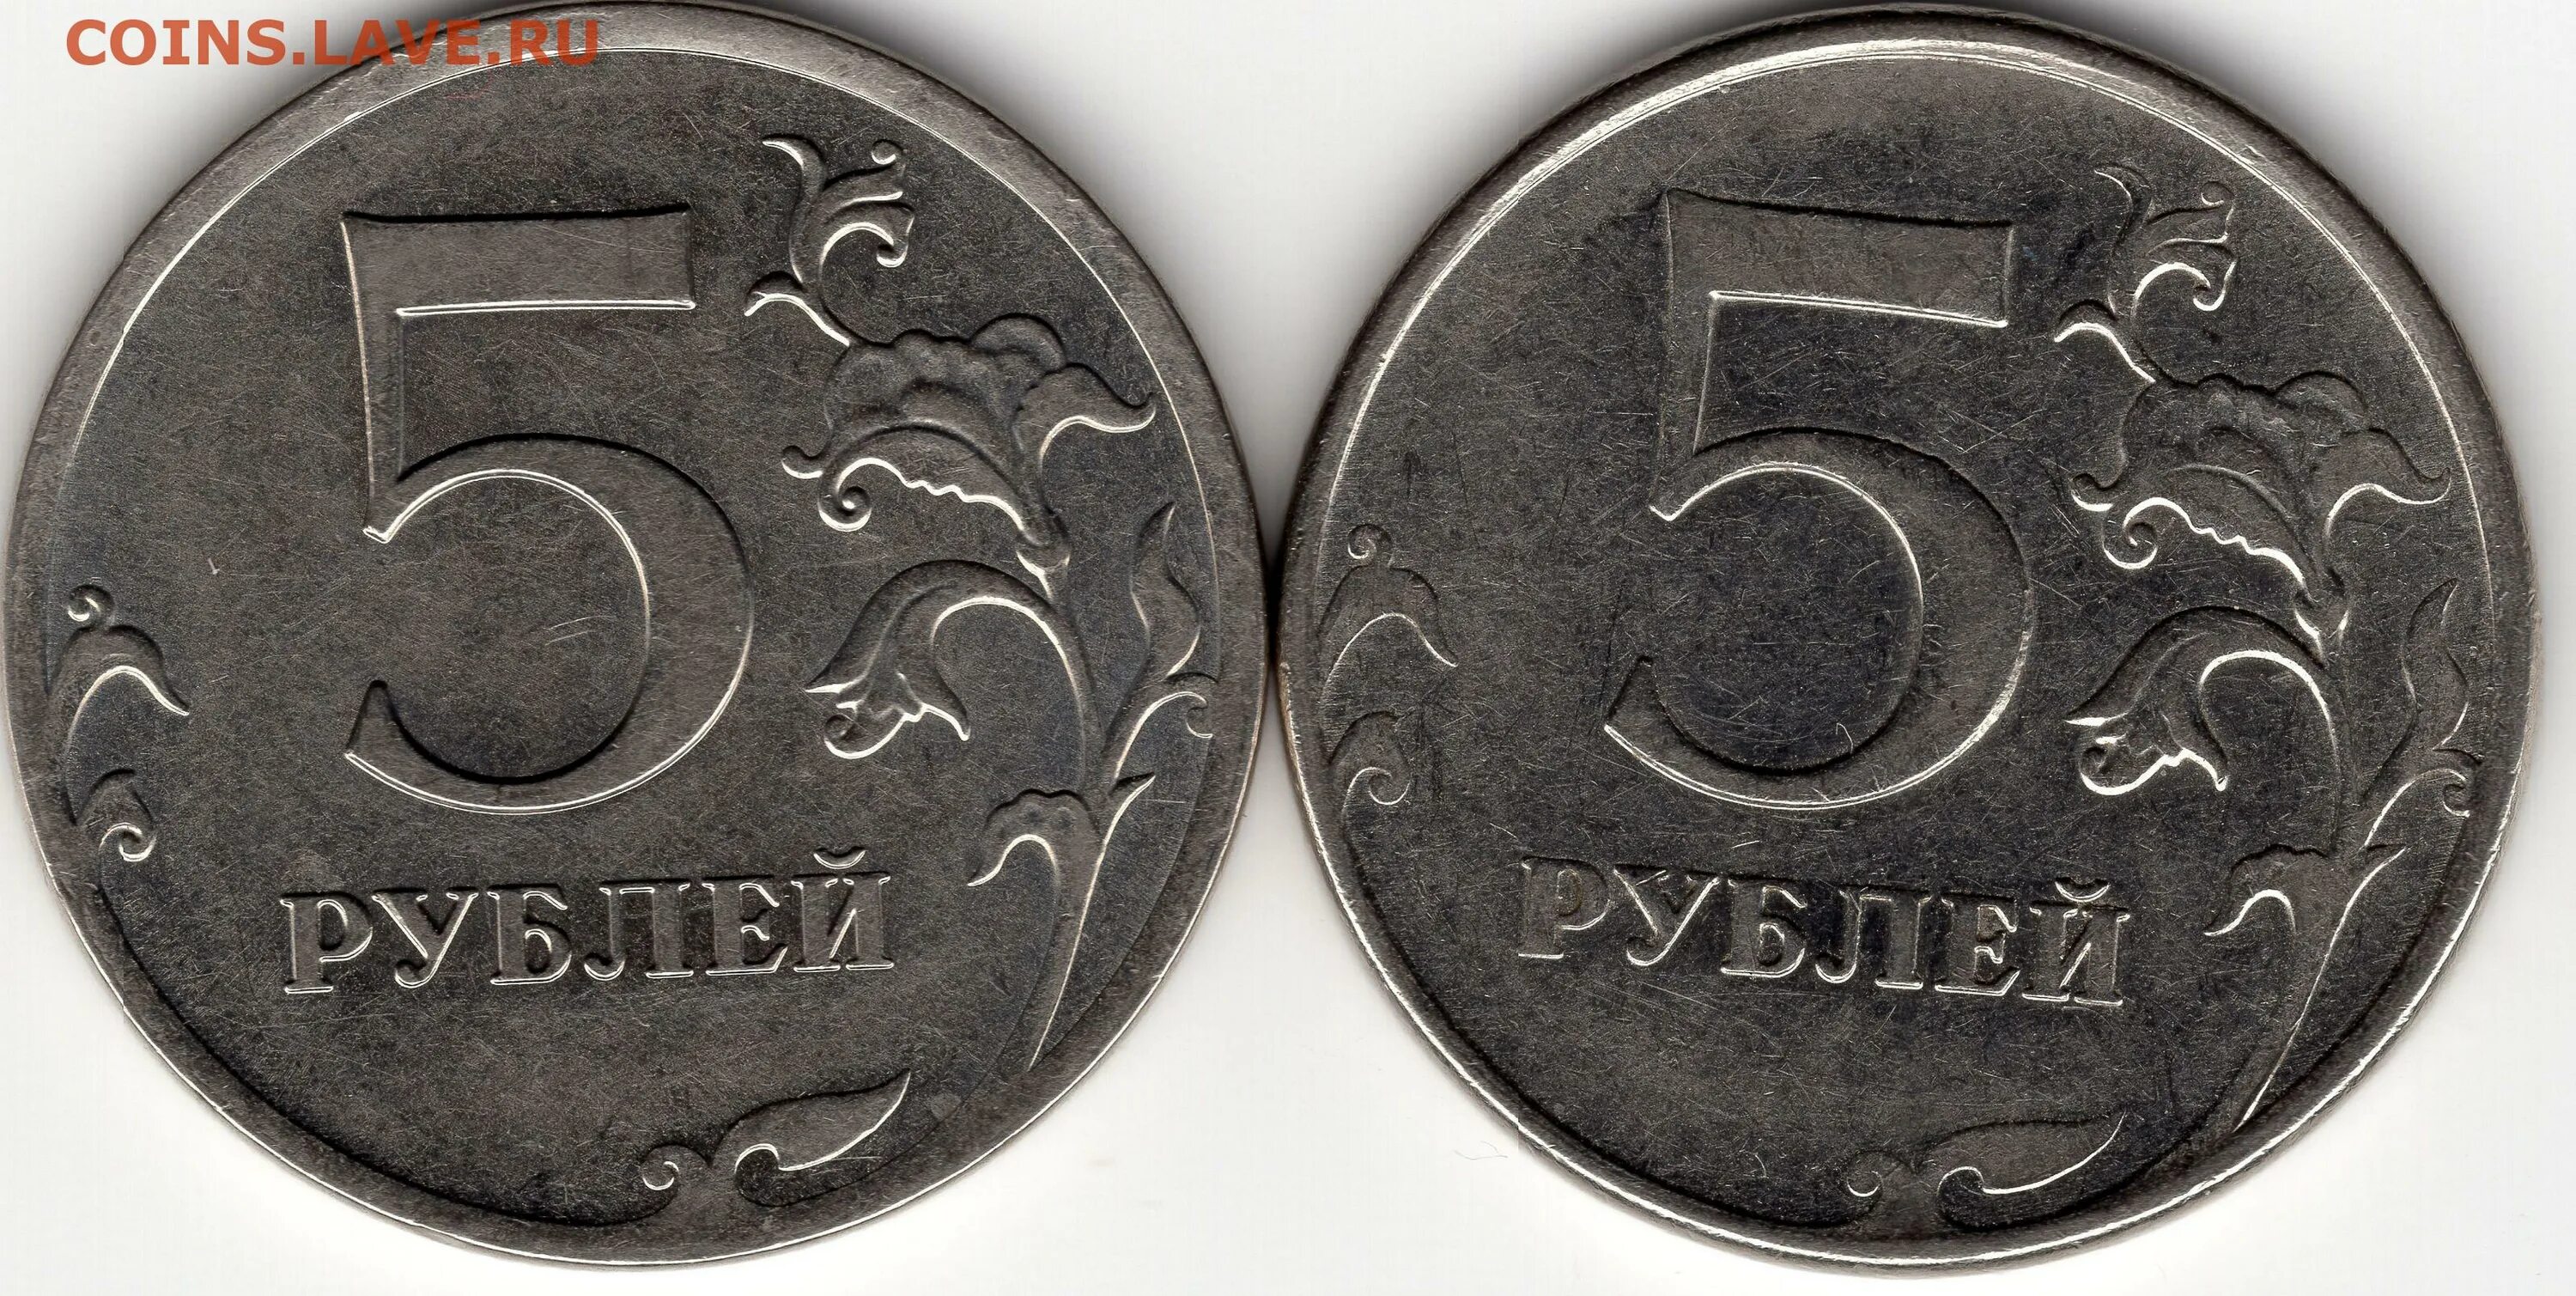 Сторона монеты 6 букв. Лицевая сторона 5 рублей. Лицевая сторона монеты 5 рублей. 5 Руб 2012г. Лицевая сторона монеты 5 руб.